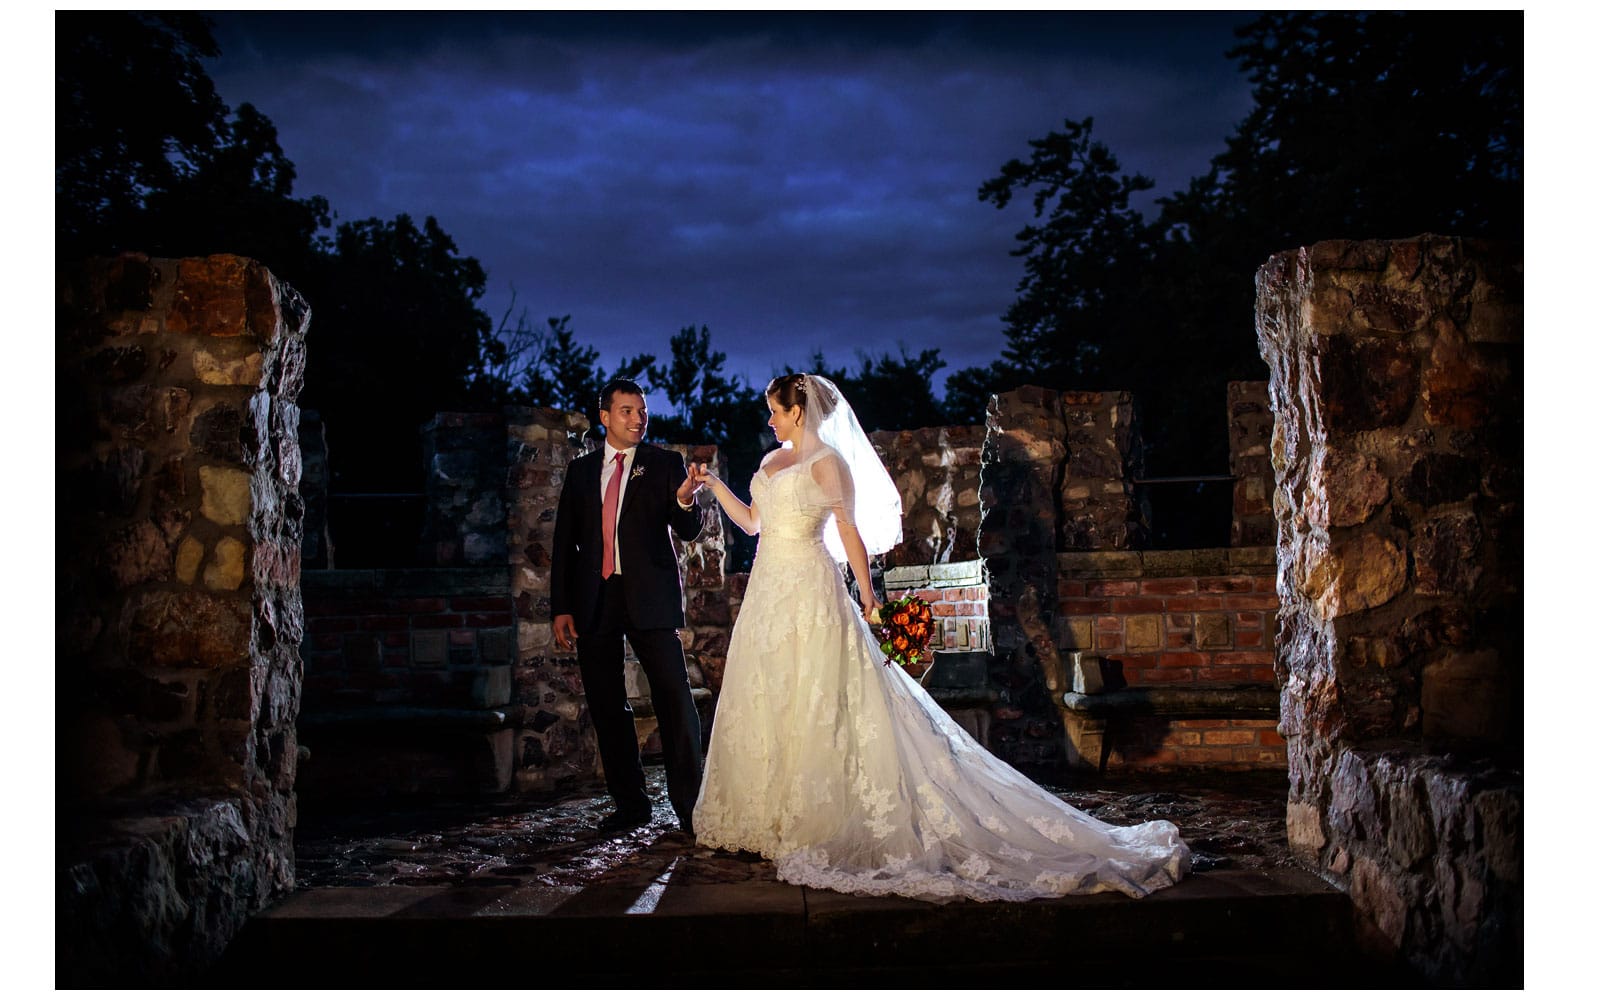 Castle Zbiroh Wedding / Paola & Alexei / romantic wedding portraits at night